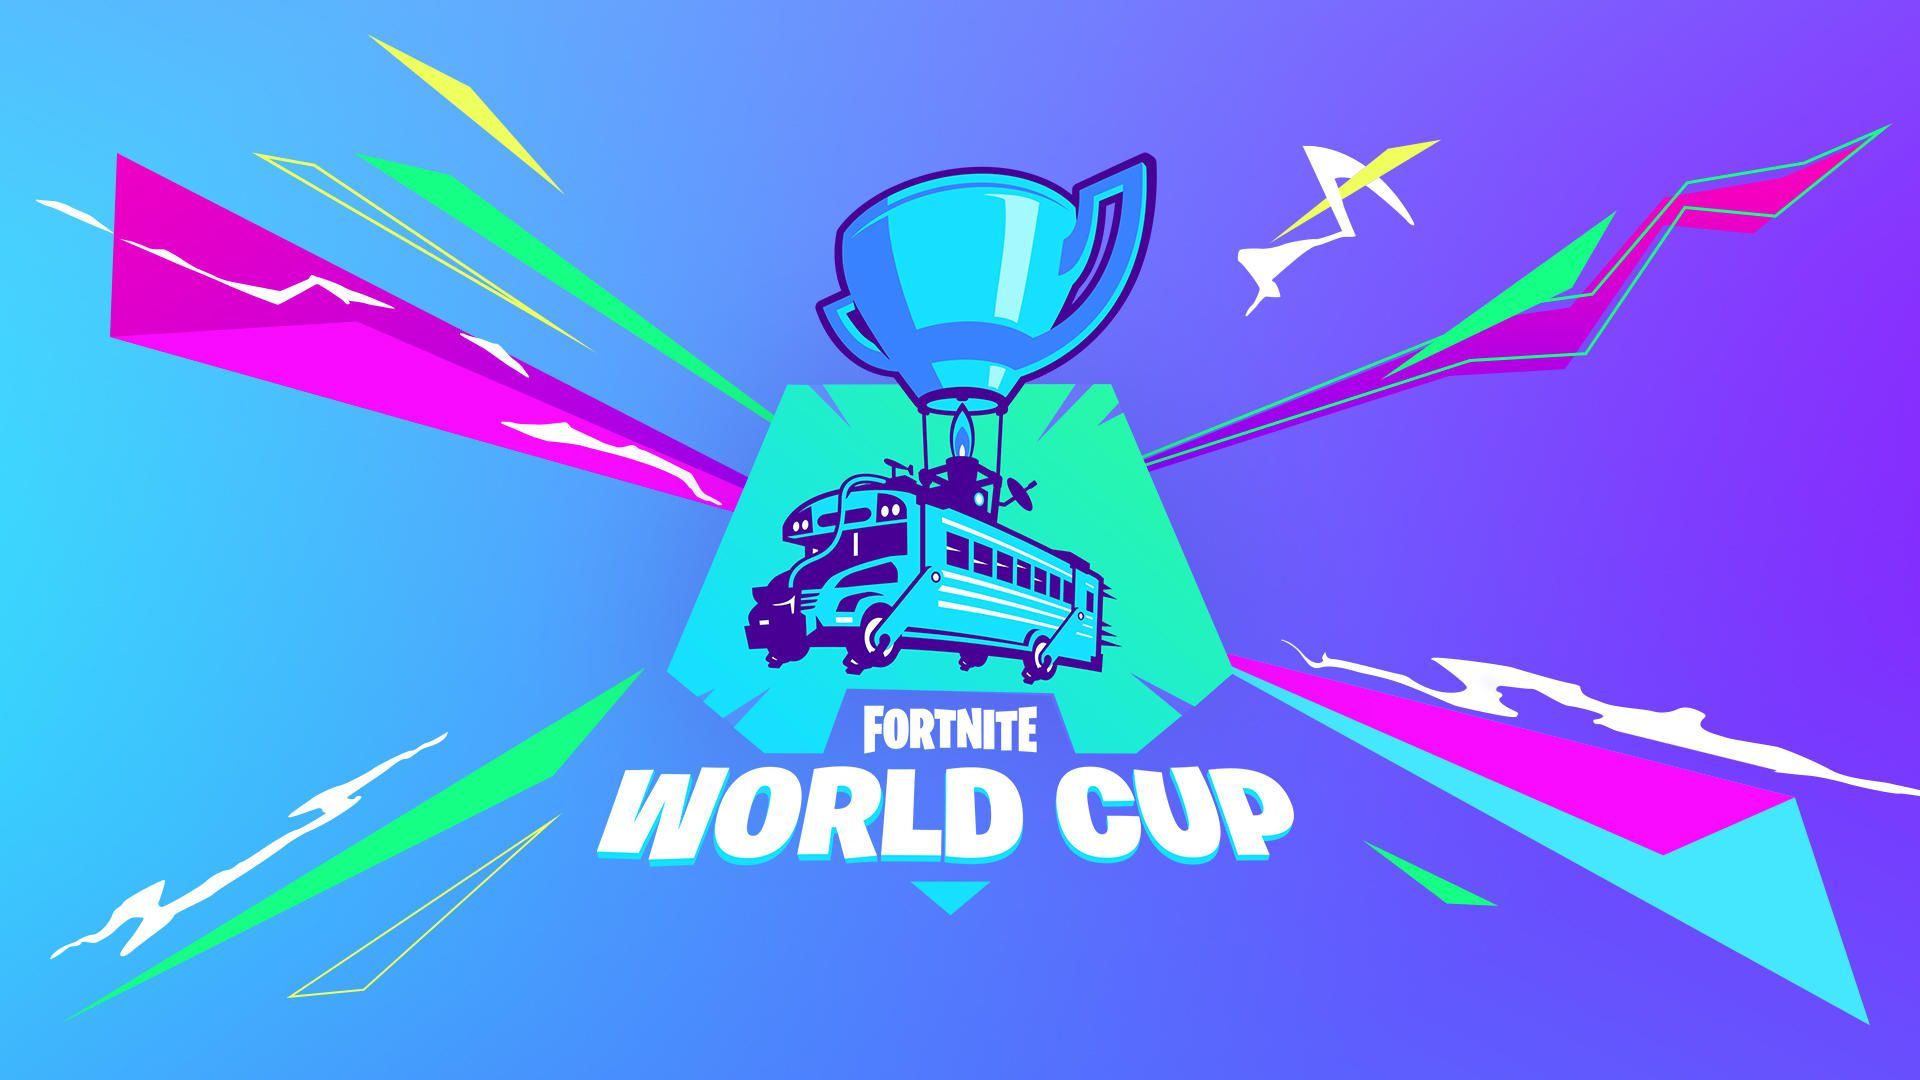 Fortnite 2019 World Cup Wallpaper